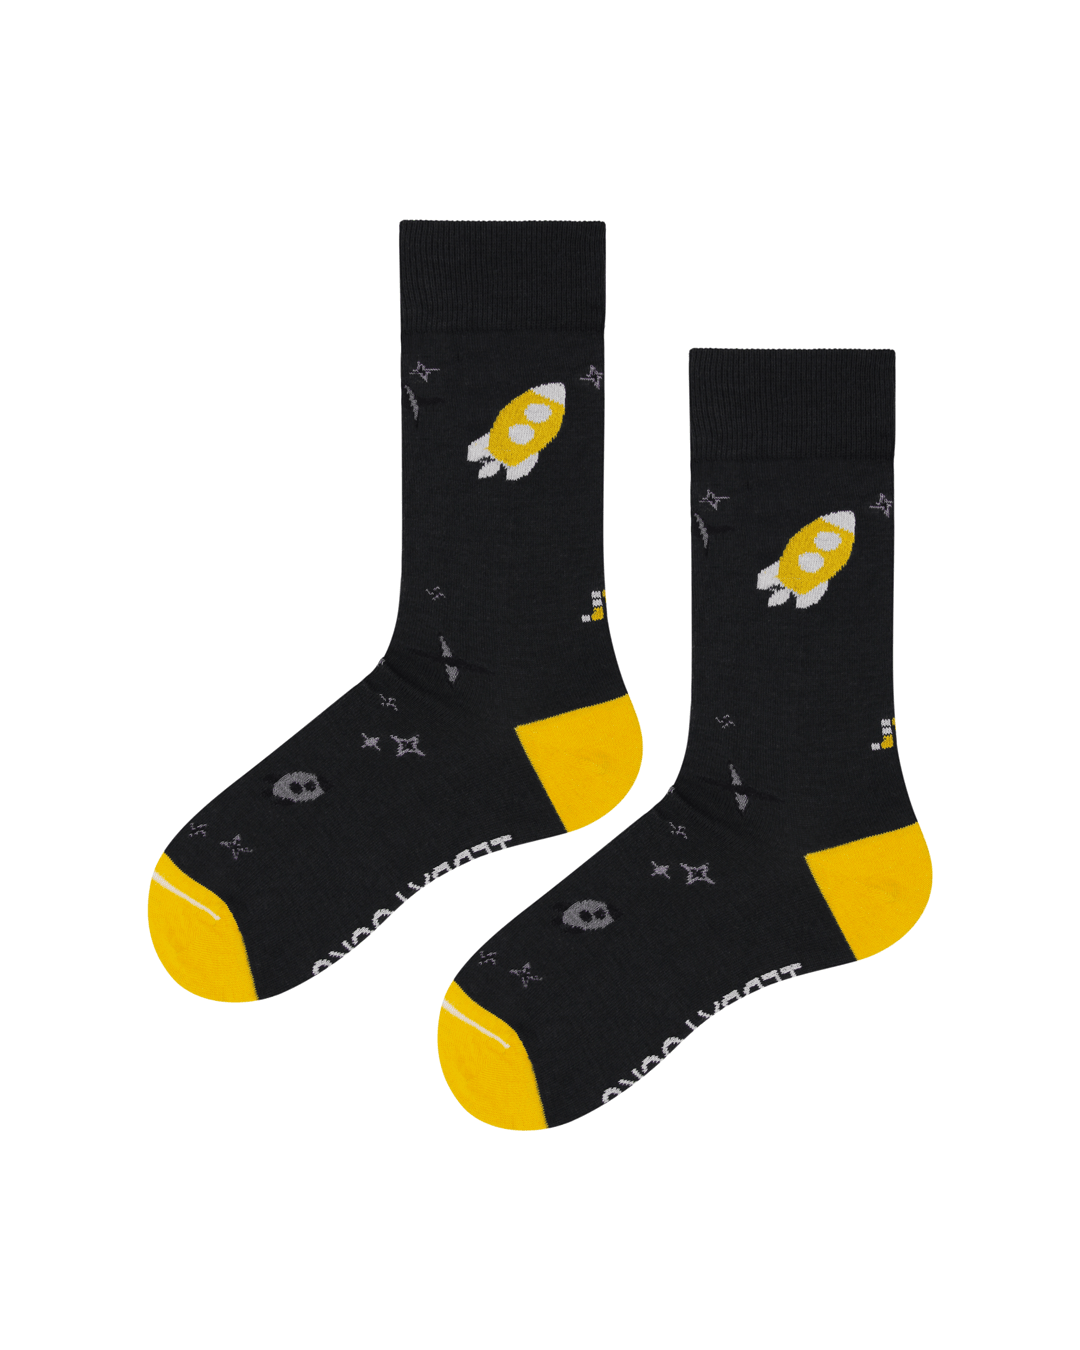 Sustainable Socks | Eco-friendly Crew Socks Made in the USA – Teddy Locks